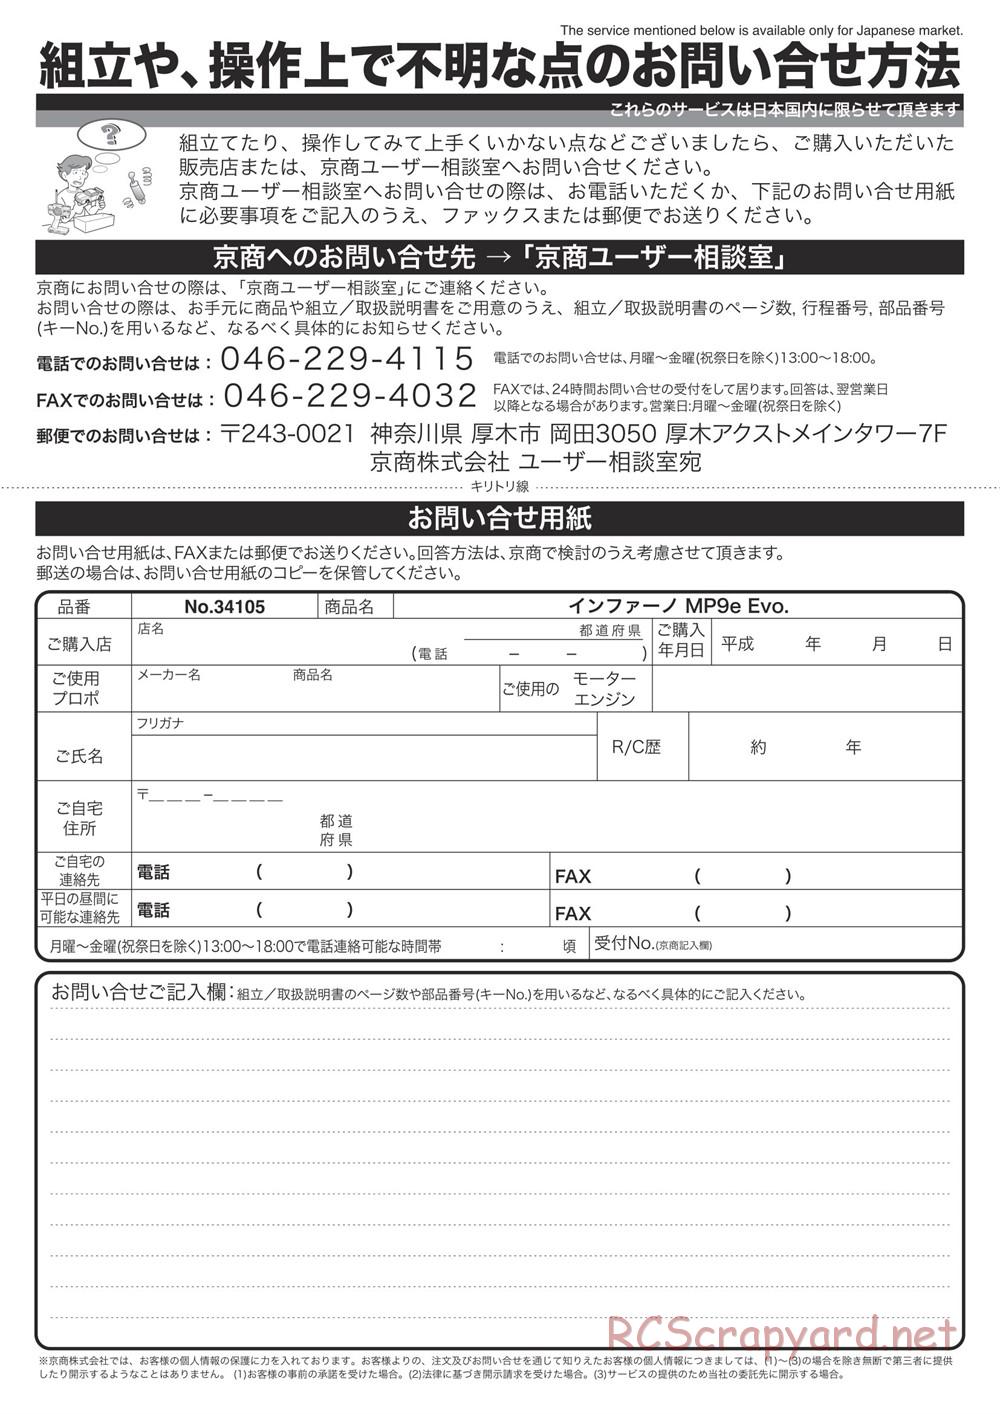 Kyosho - Inferno MP9e Evo - Manual - Page 57